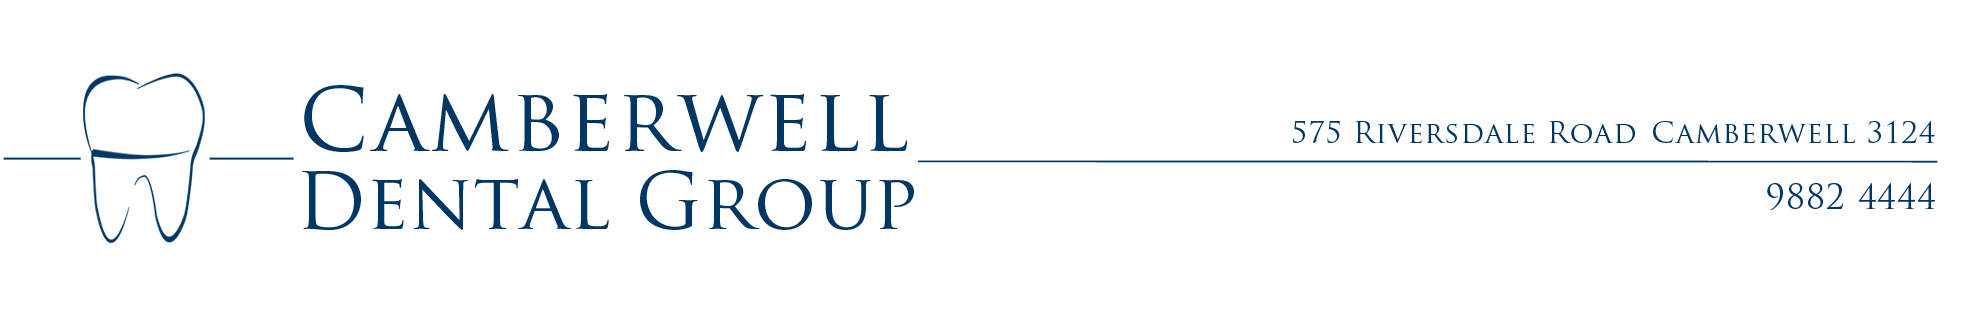 Camberwell Dental Group logo